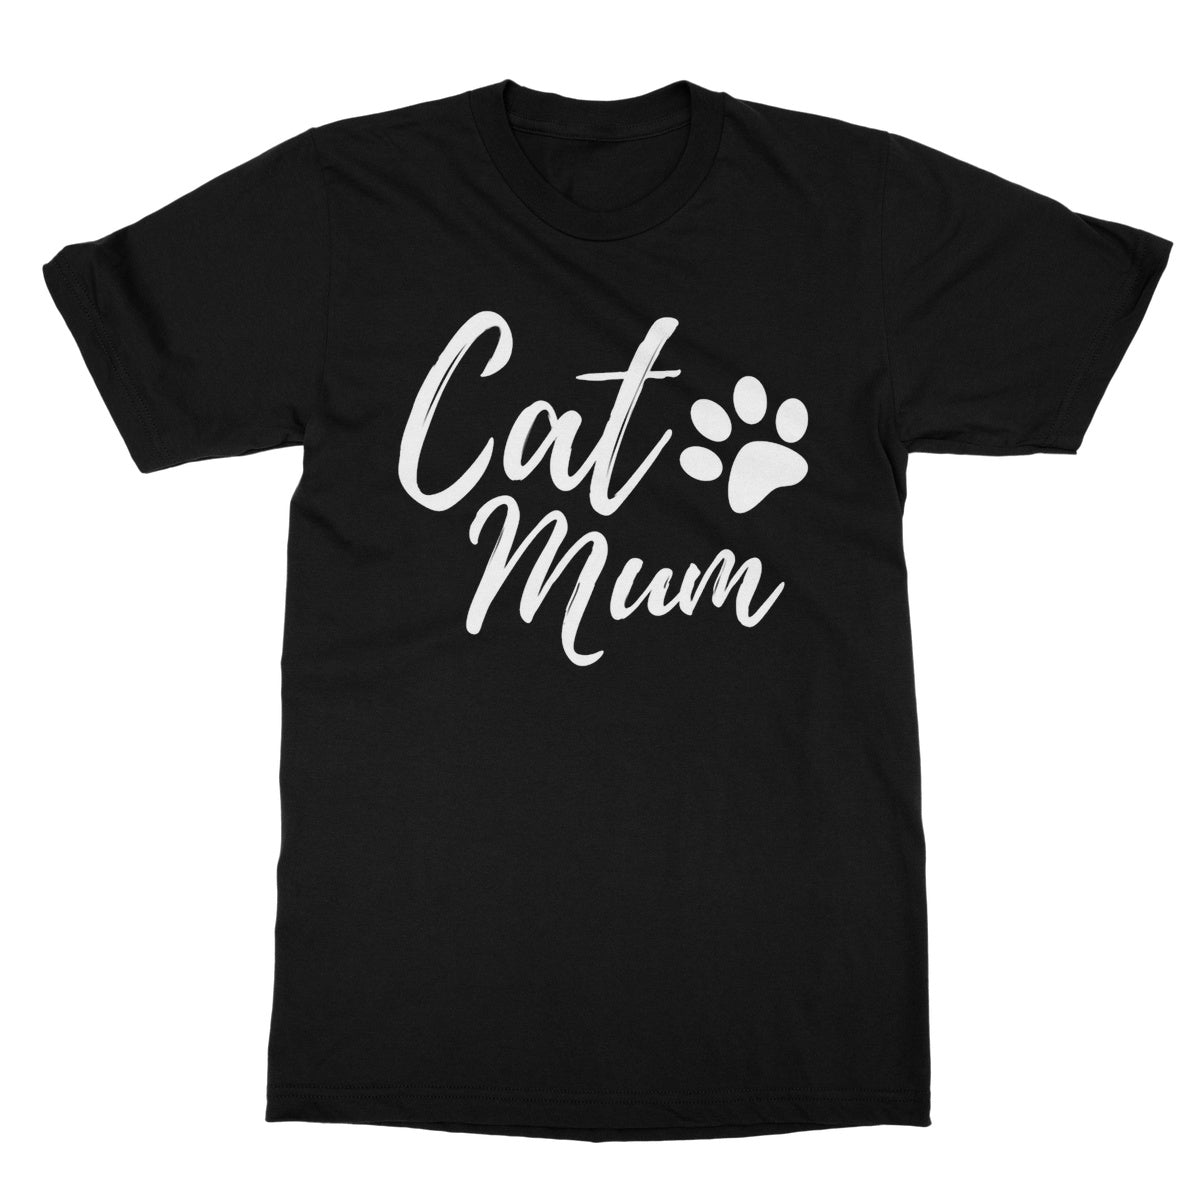 cat mum t shirt black